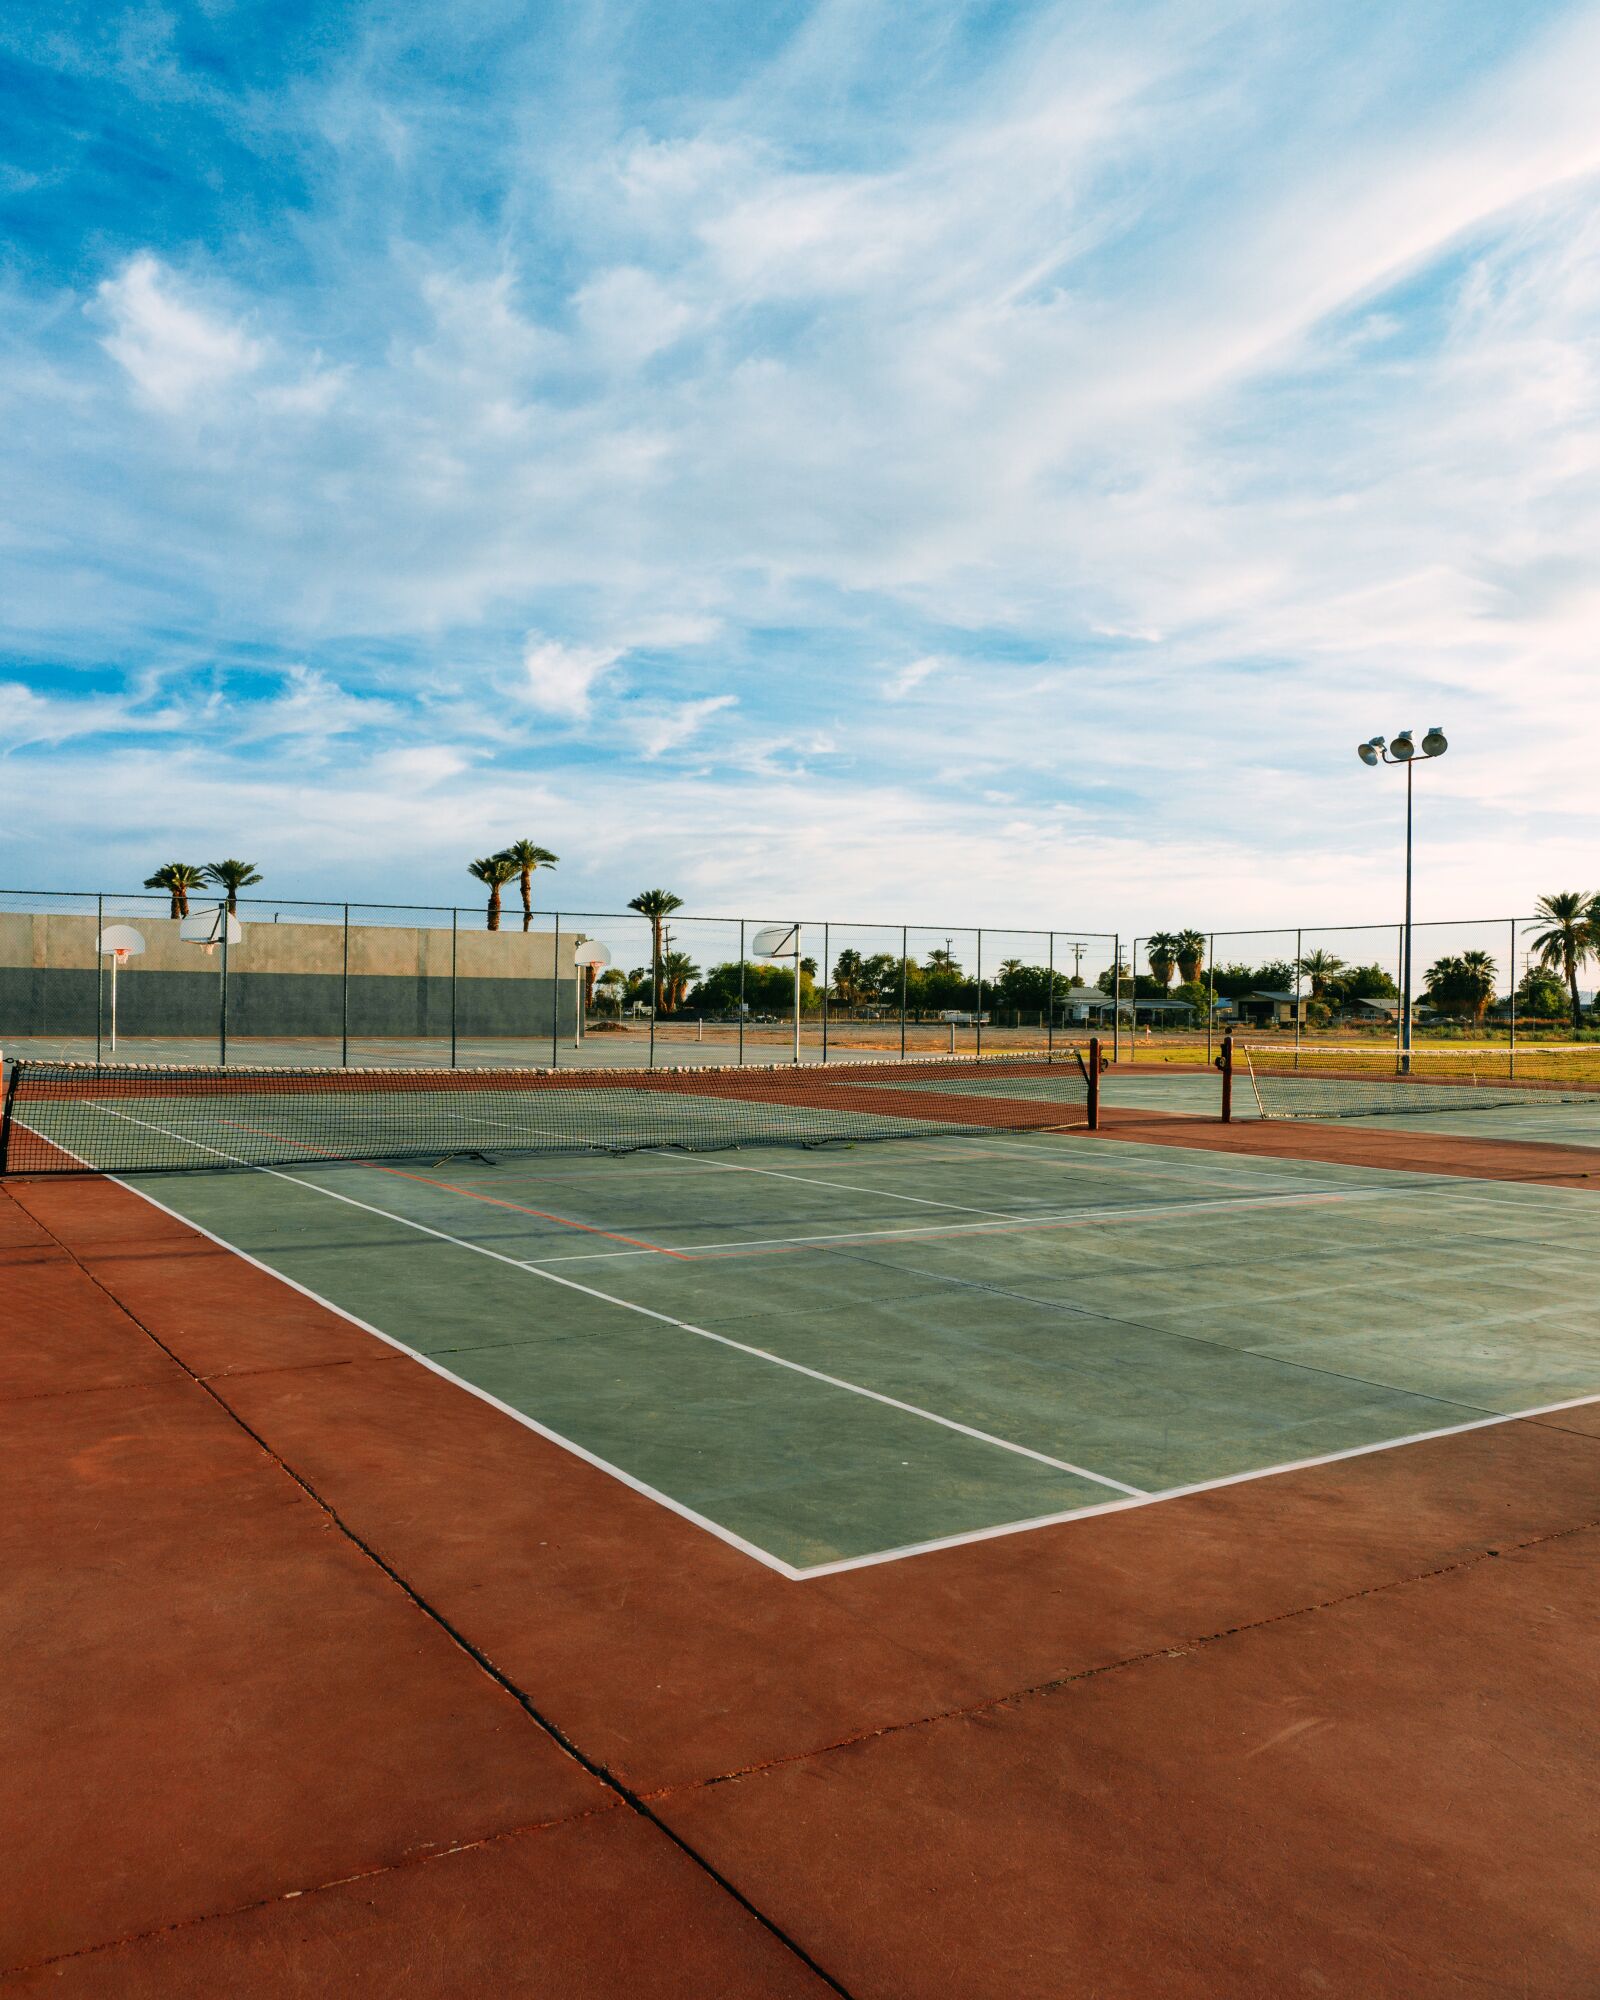 Sony a6000 sample photo. Tennis court, sky, tennis photography